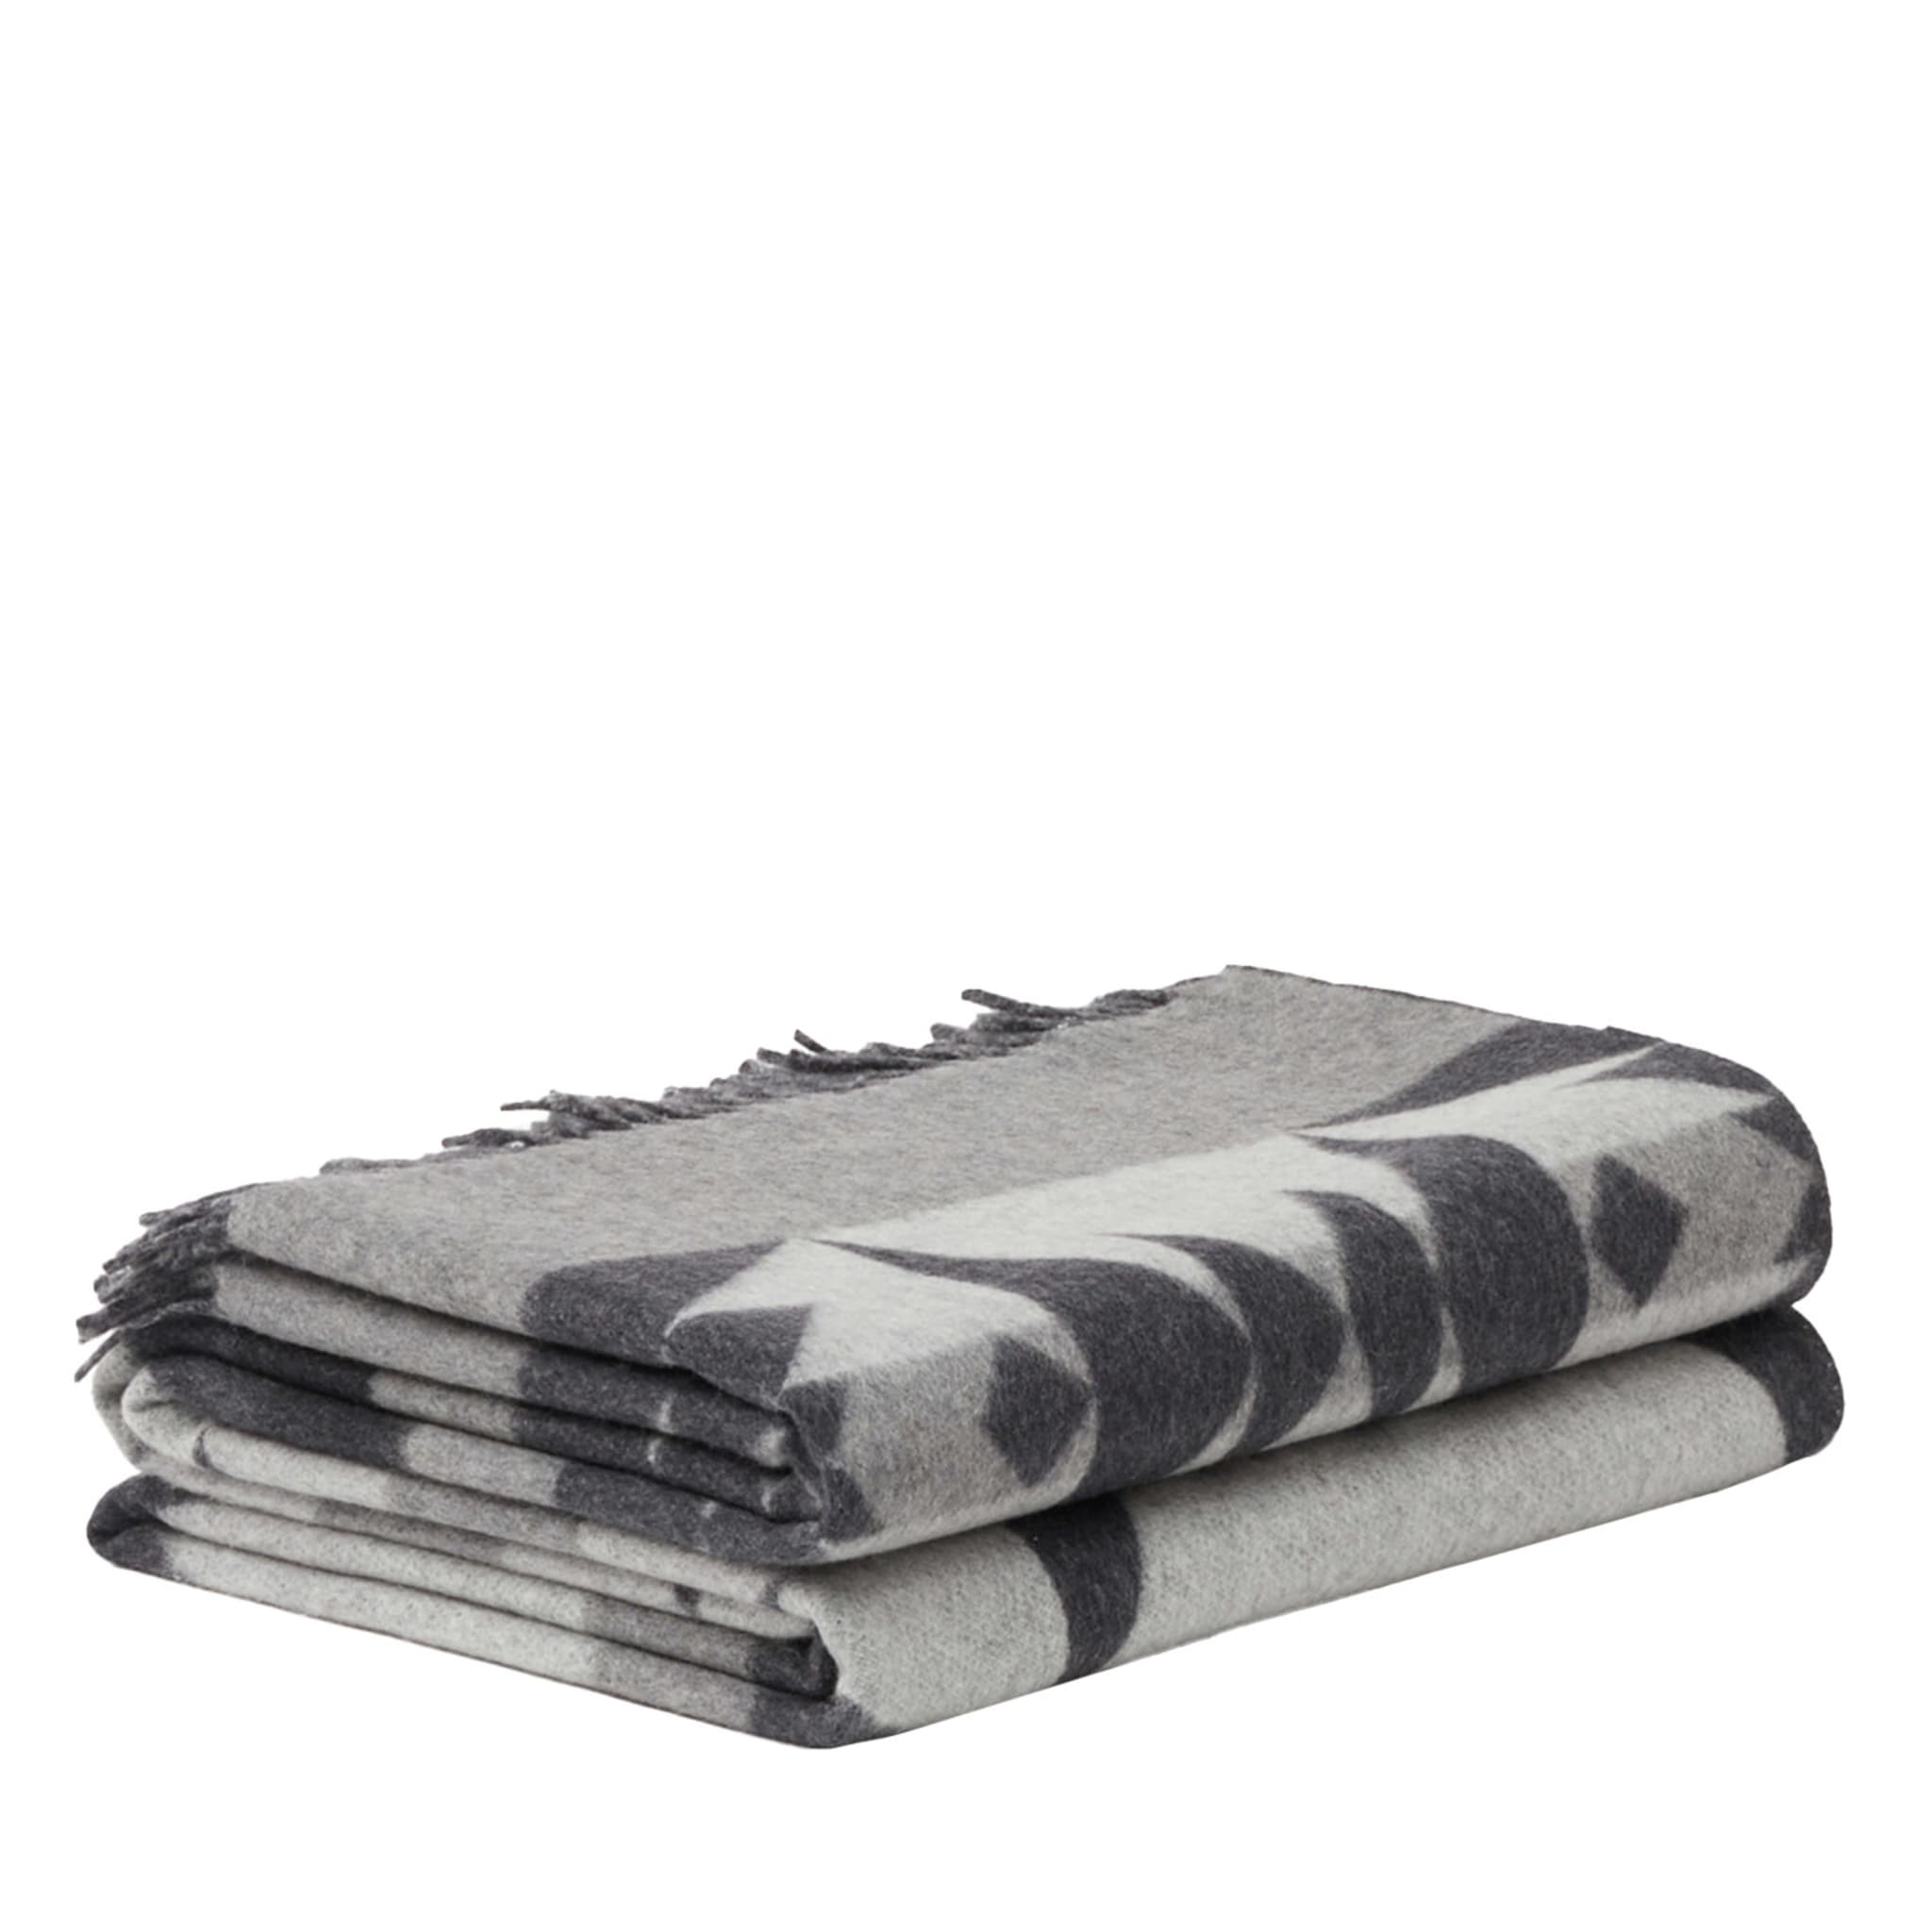 Dakota Patterned Gray Small Blanket - Main view